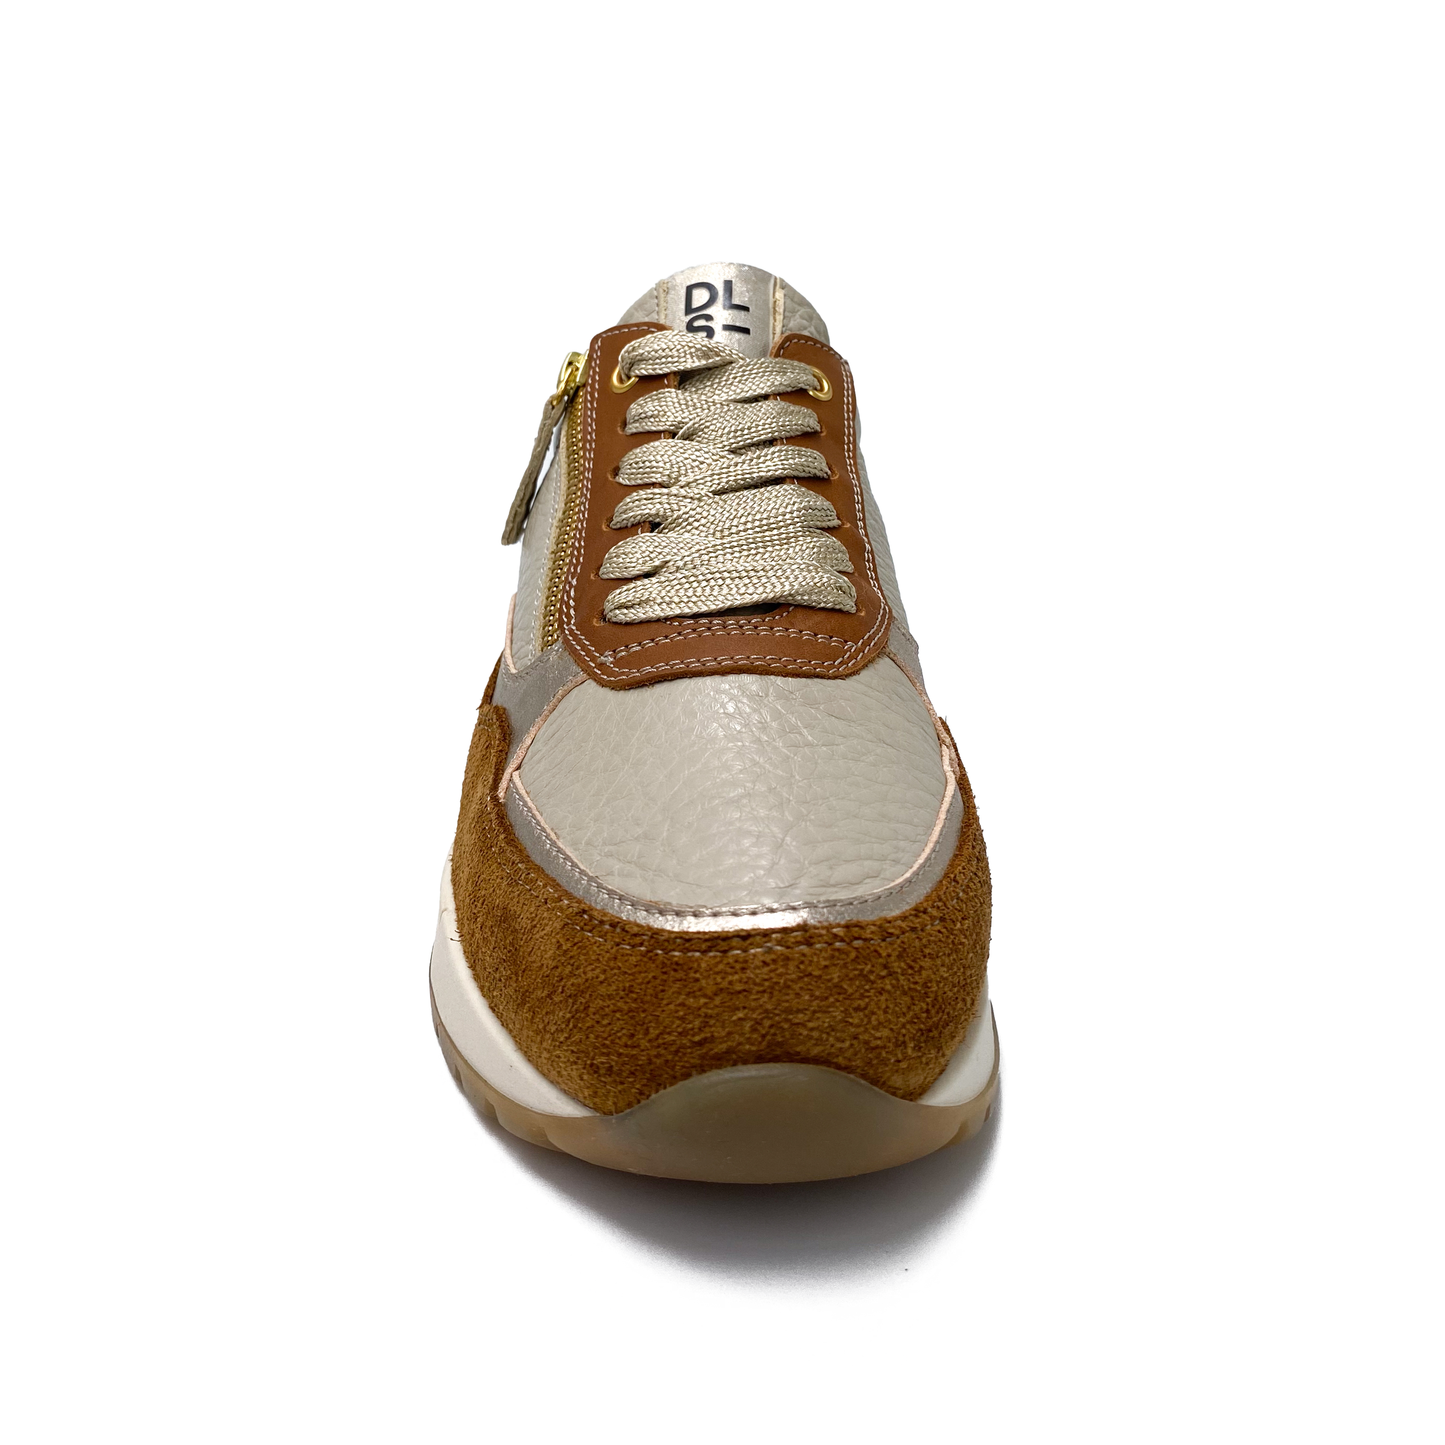 DL Sport Sneaker m/lynlås Cognac/Bark